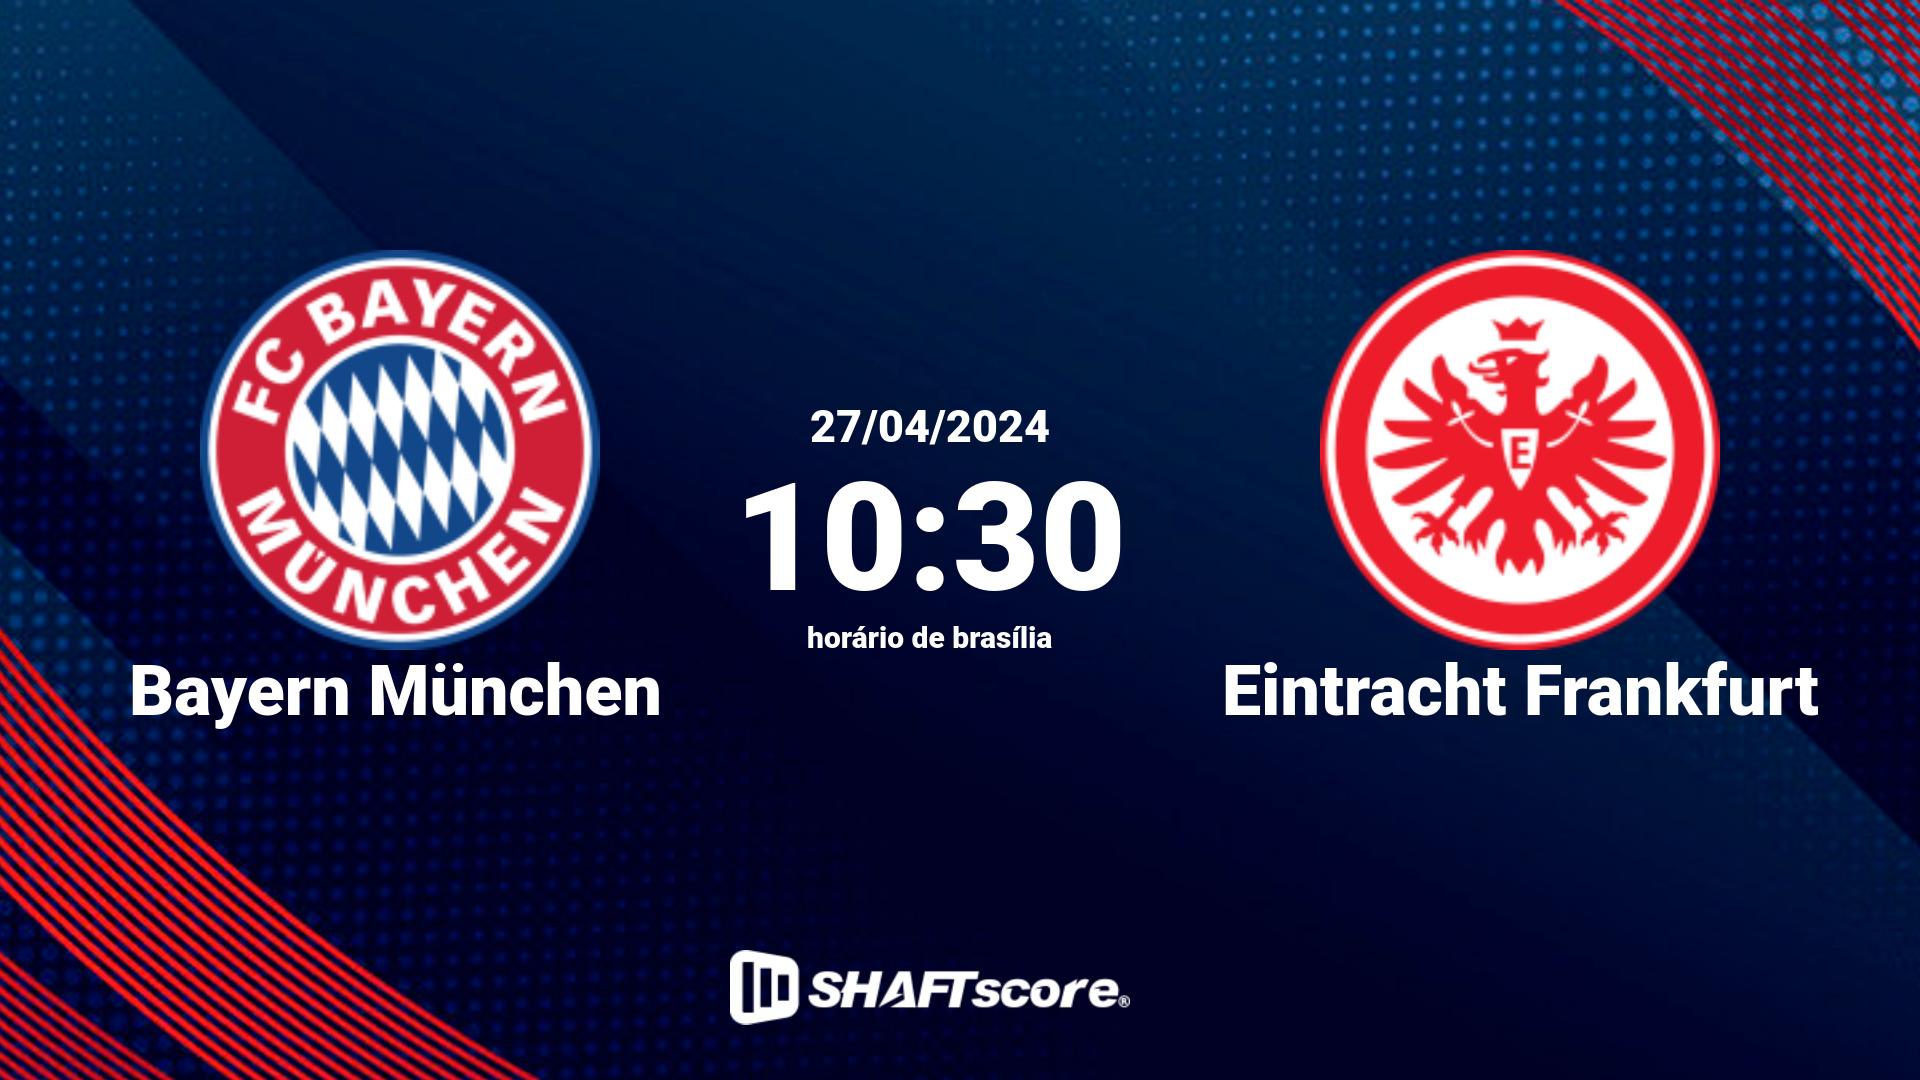 Estatísticas do jogo Bayern München vs Eintracht Frankfurt 27.04 10:30